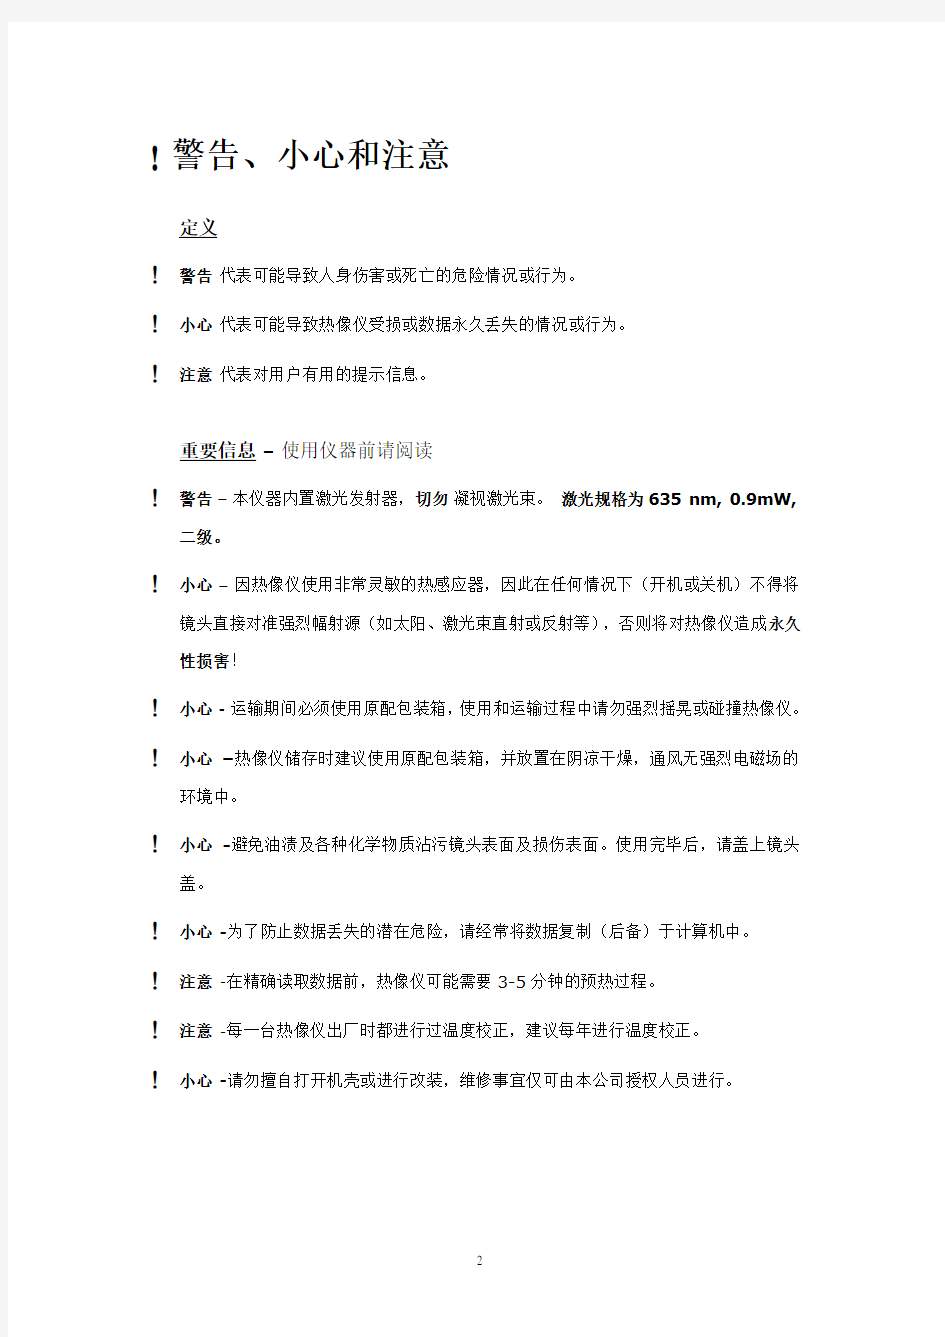 IRI2010热成像仪中文用户手册